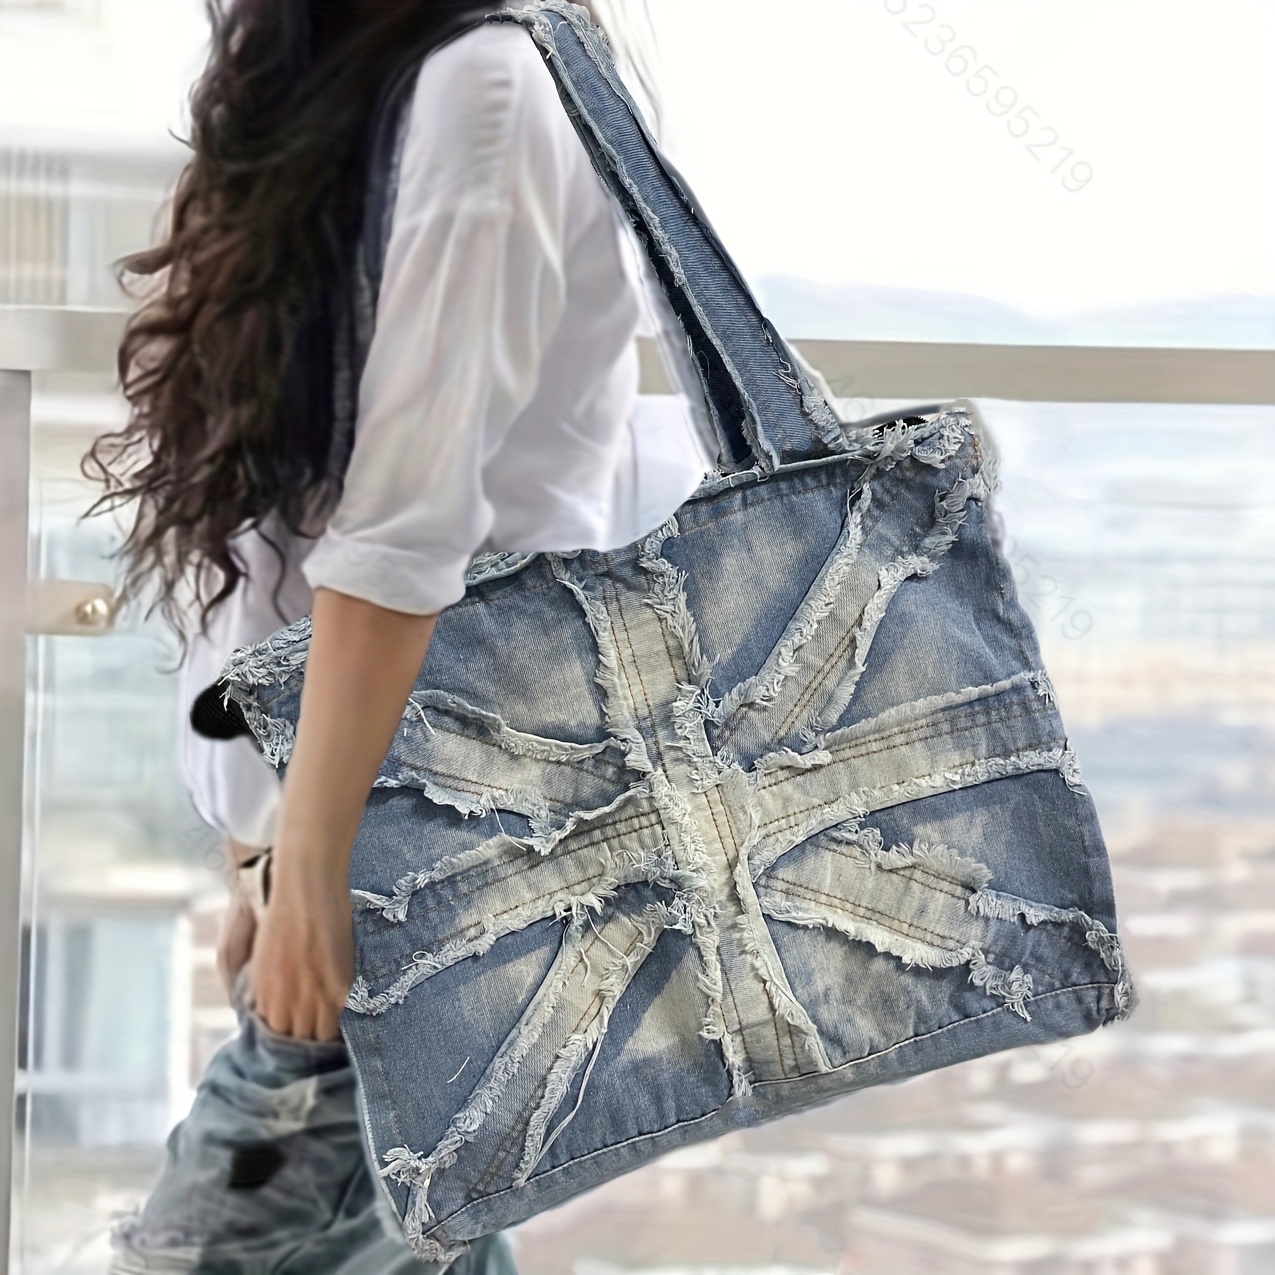 Mini Small Denim Purse Jean Boston Barrel Bags Quilted Checkered Top Handle Canvas Tote Crossbody Bags Satchel Handbag for Women,Blue